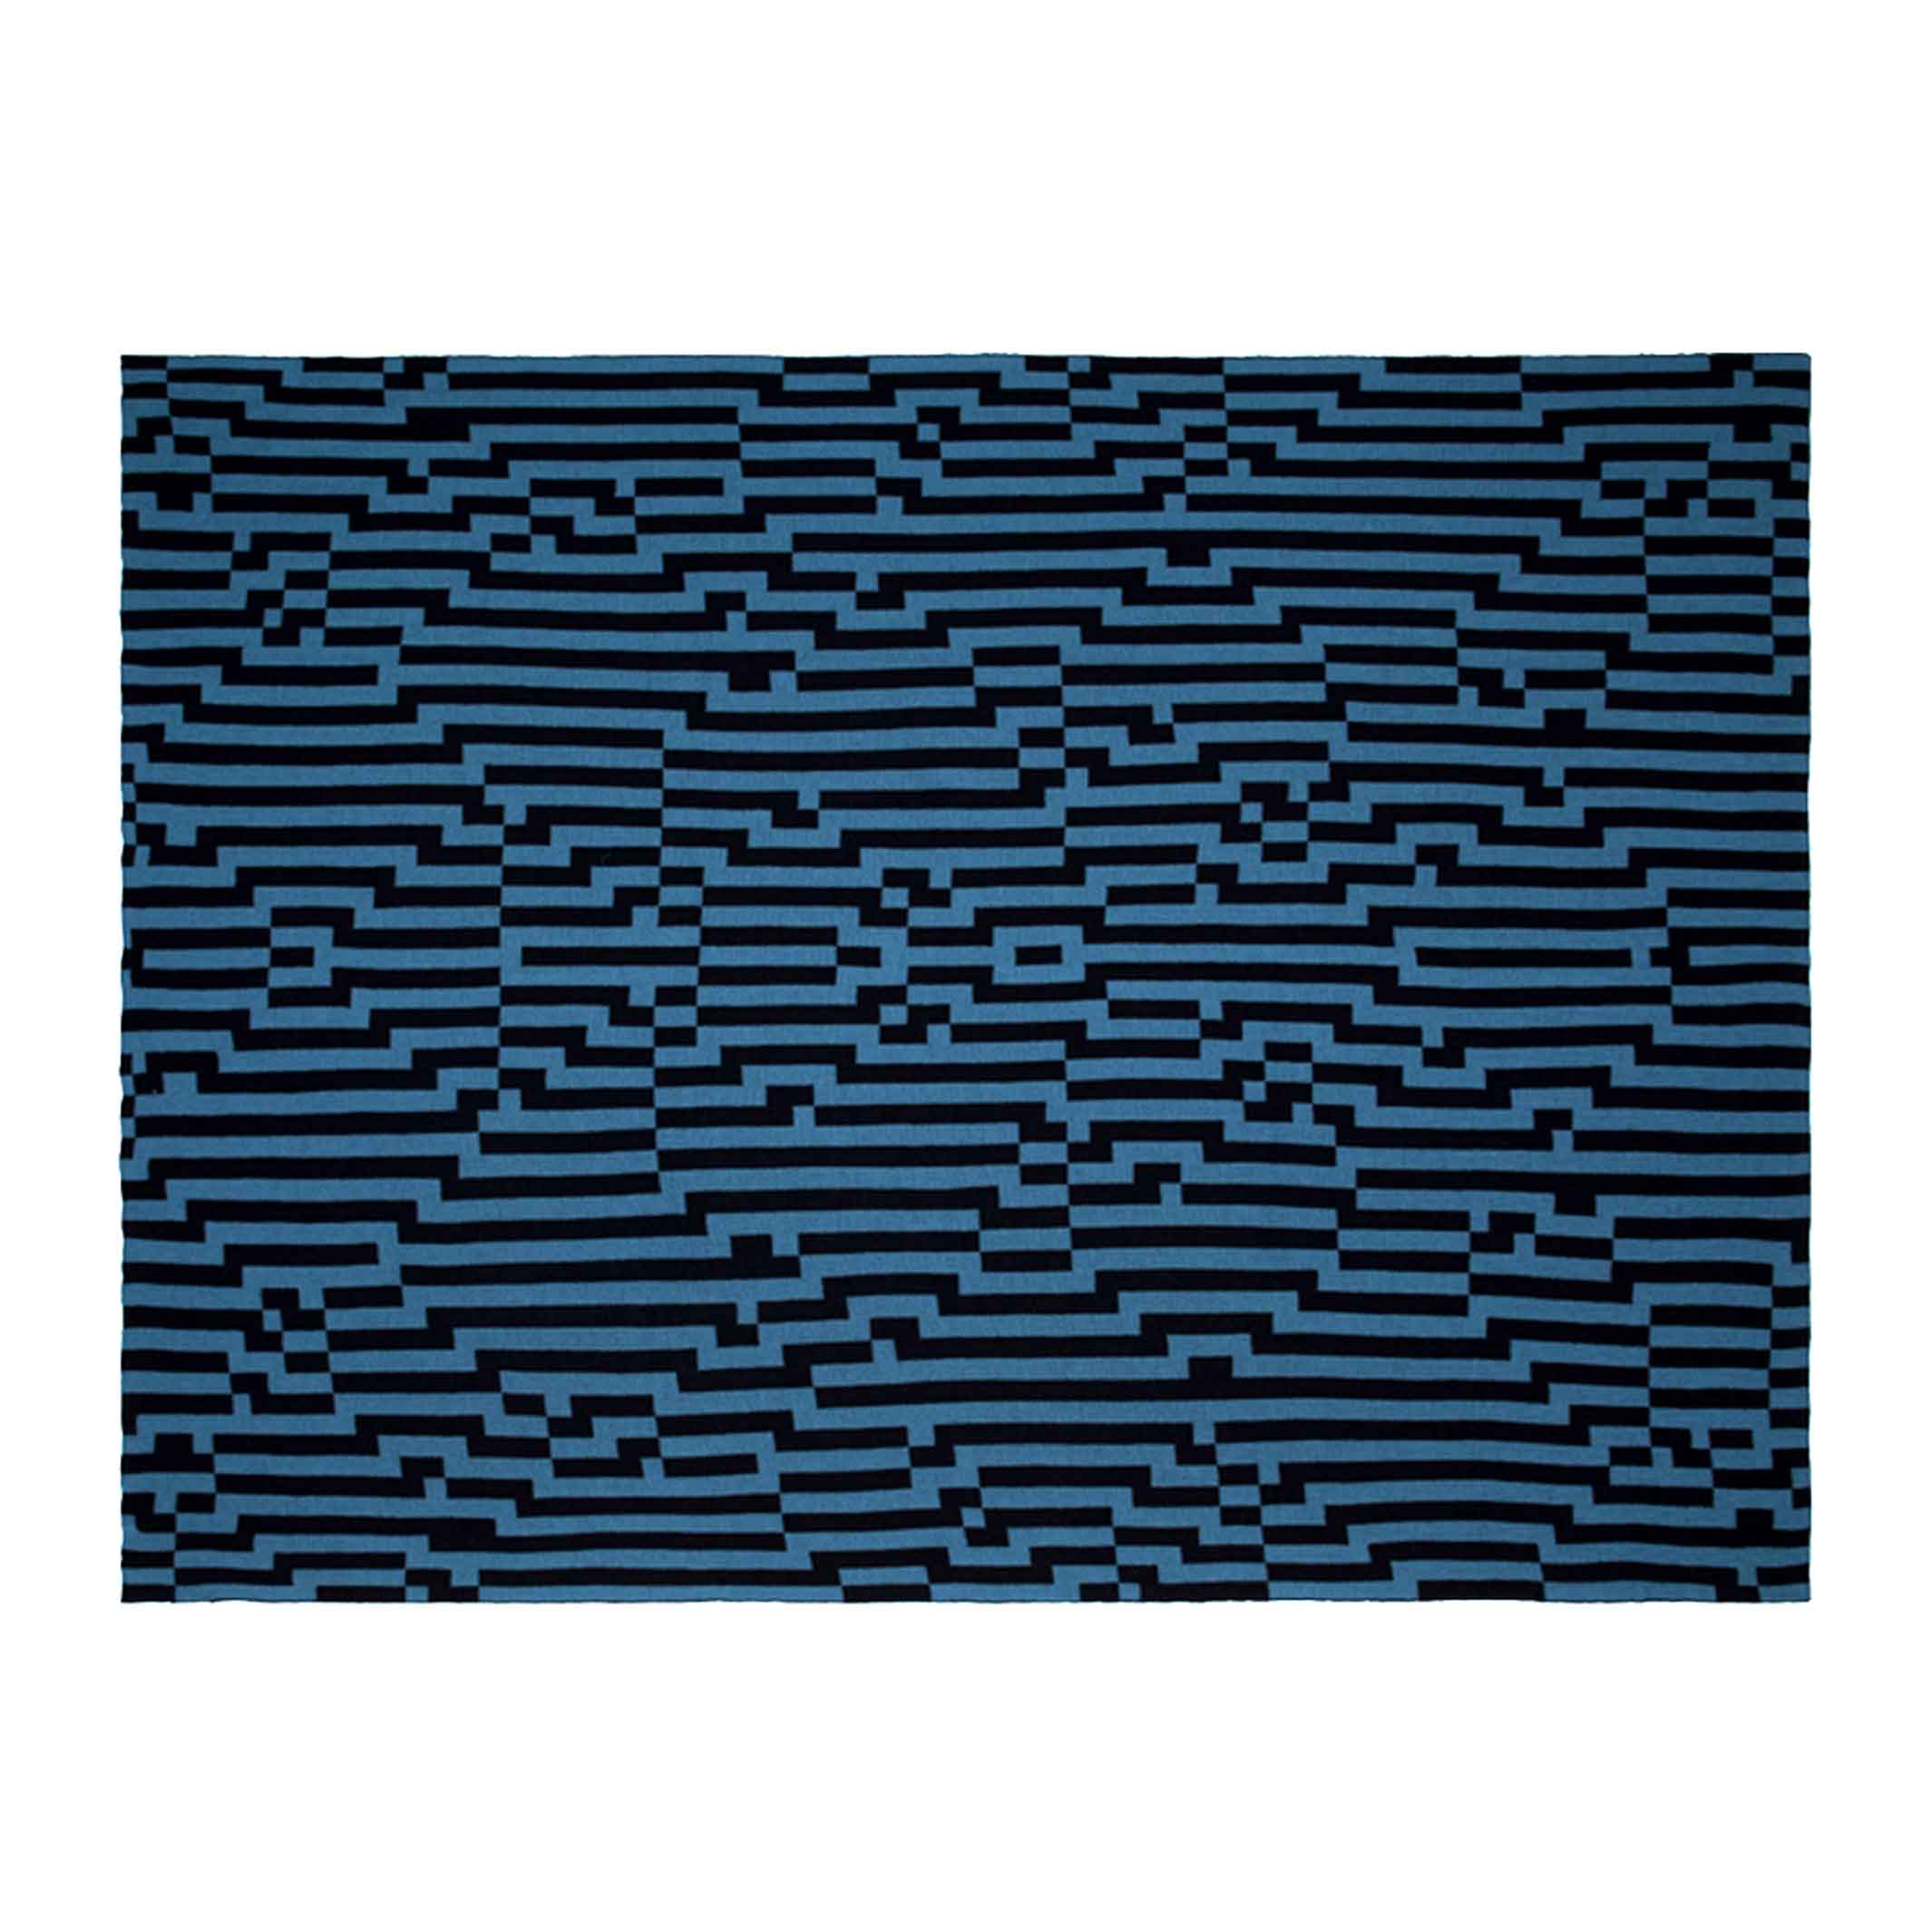 ZOOM BITMAP AVANT 5 | COUVRE-LIT bleu | 180x140cm | 100% laine mérinos | Cristian Zuzunaga